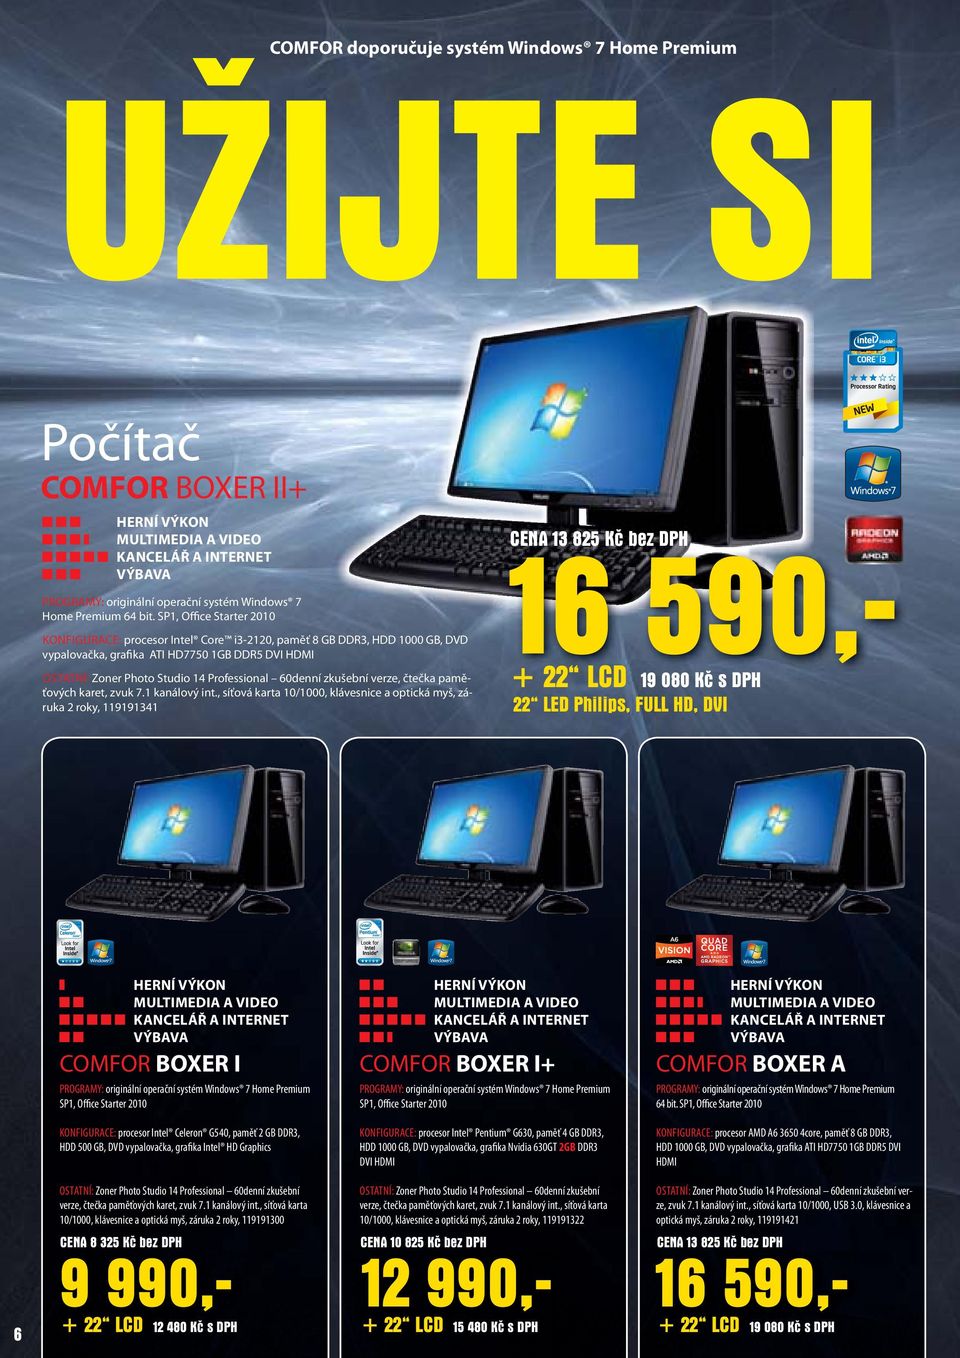 SP1, Office Starter 2010 KONFIGURACE: procesor Intel Core i3-2120, paměť 8 GB DDR3, HDD 1000 GB, DVD vypalovačka, grafika ATI HD7750 1GB DDR5 DVI HDMI OSTATNÍ: Zoner Photo Studio 14 Professional